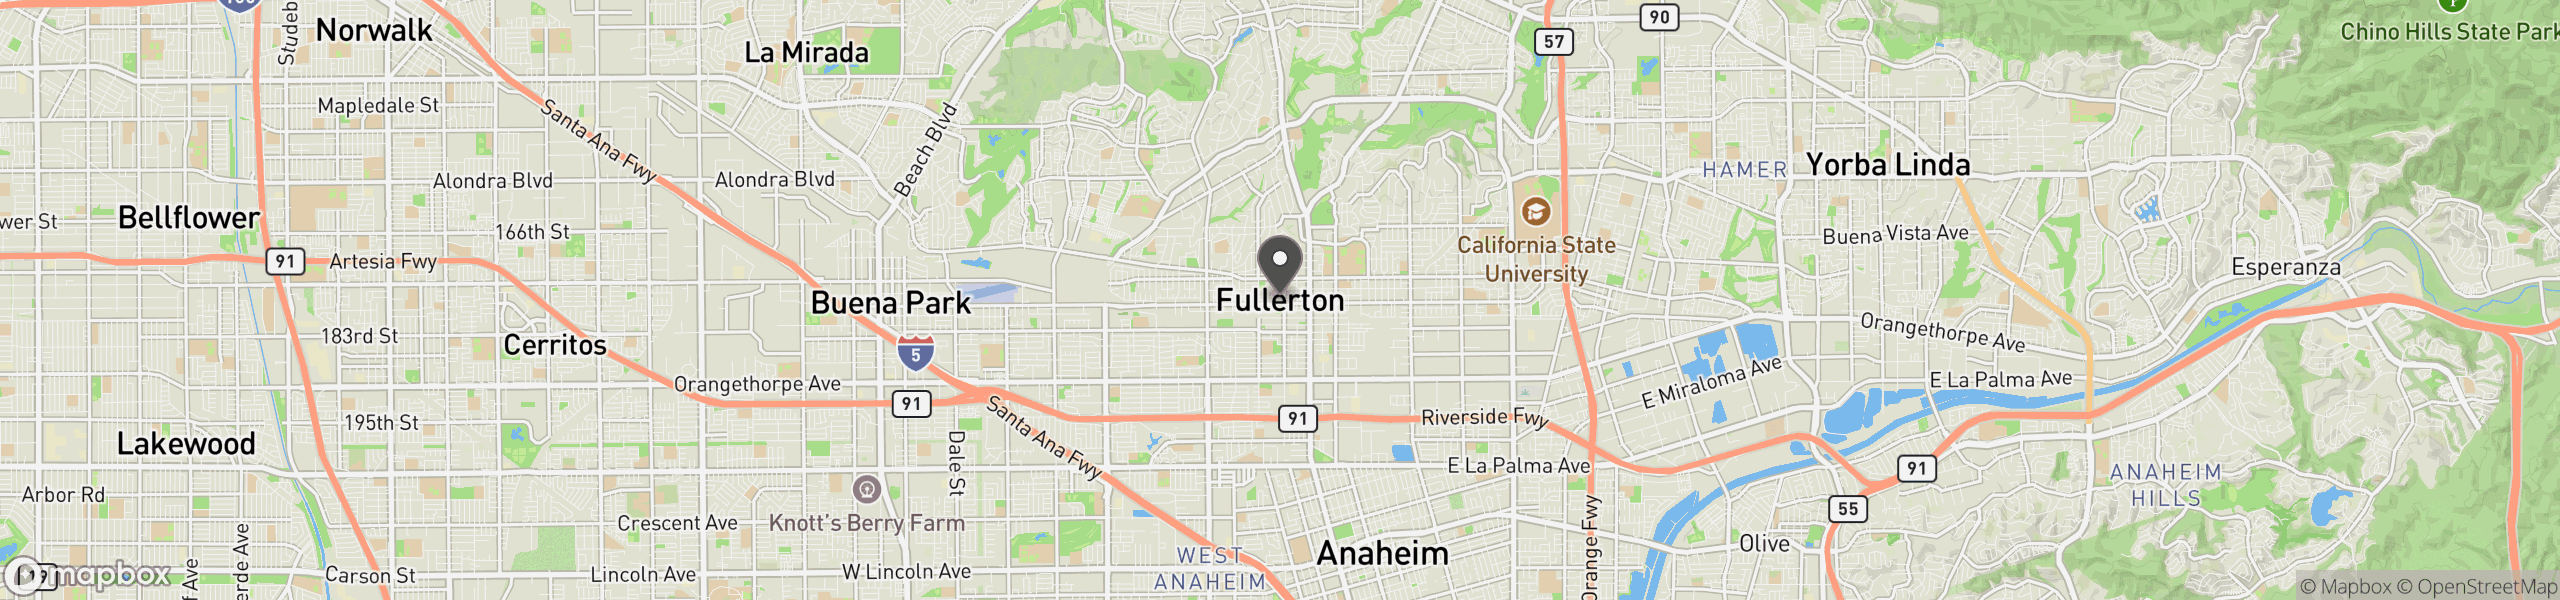 Fullerton, CA 92836